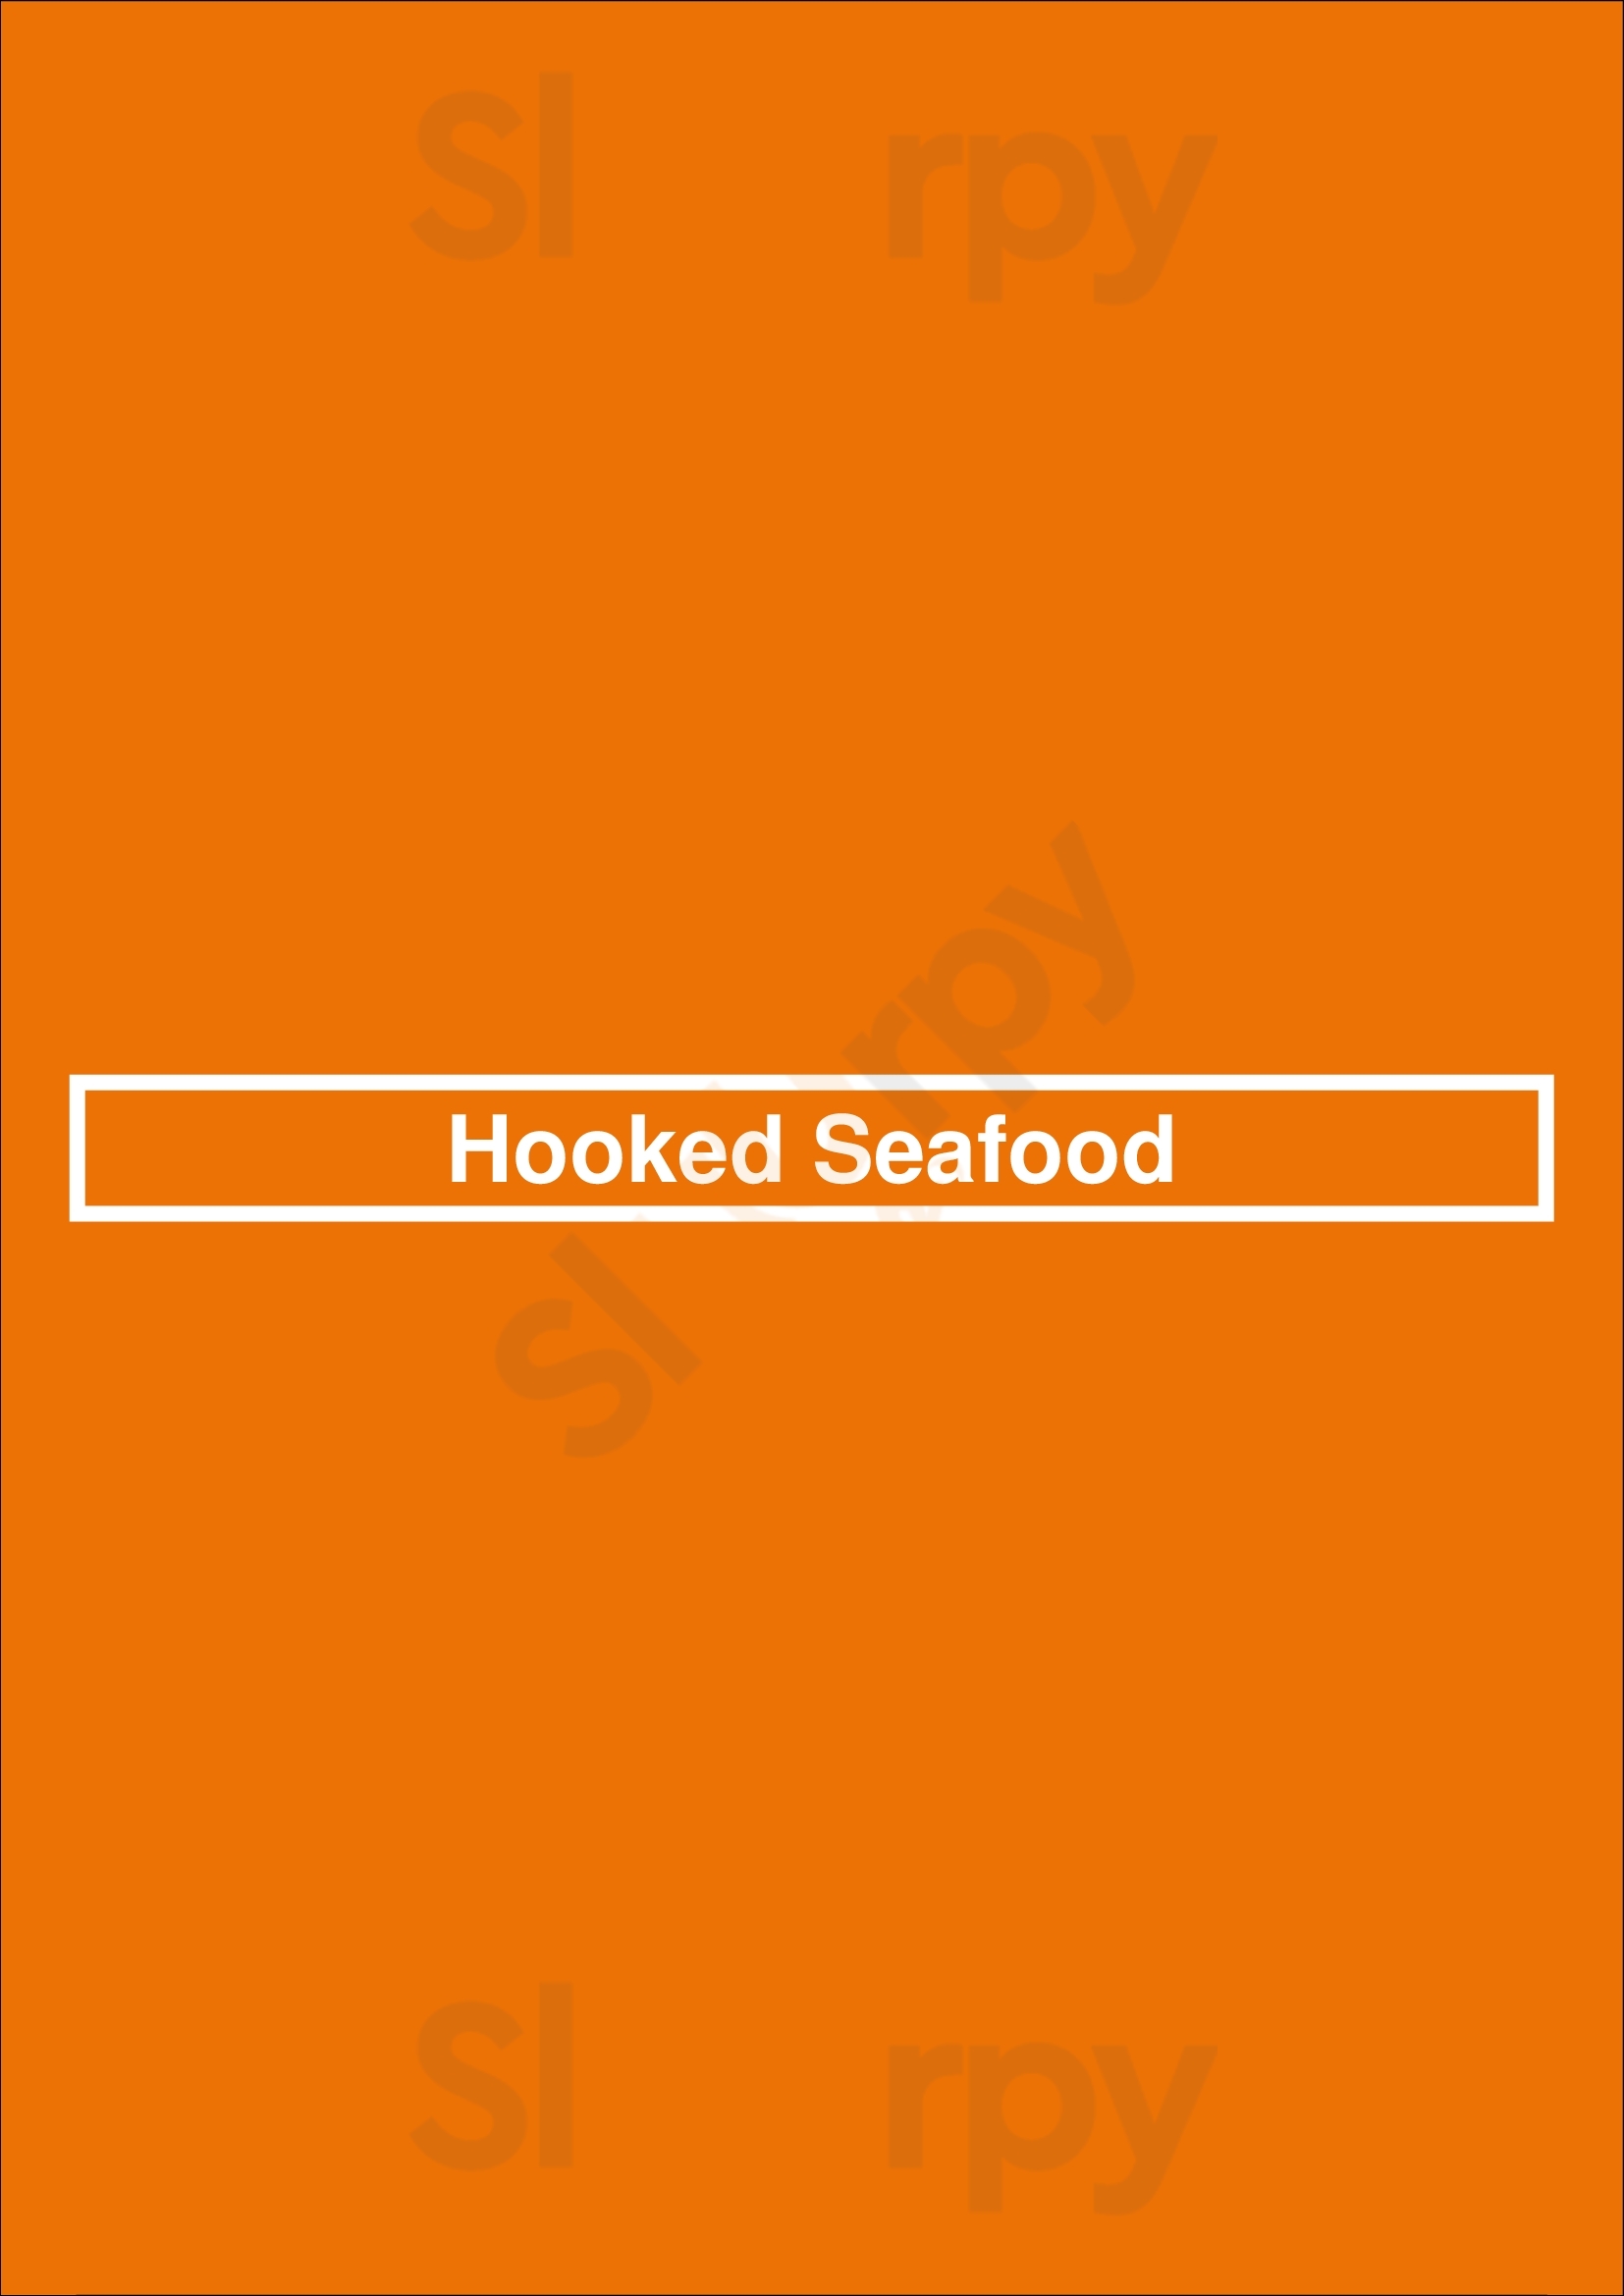 Hooked Seafood Nijverdal Menu - 1